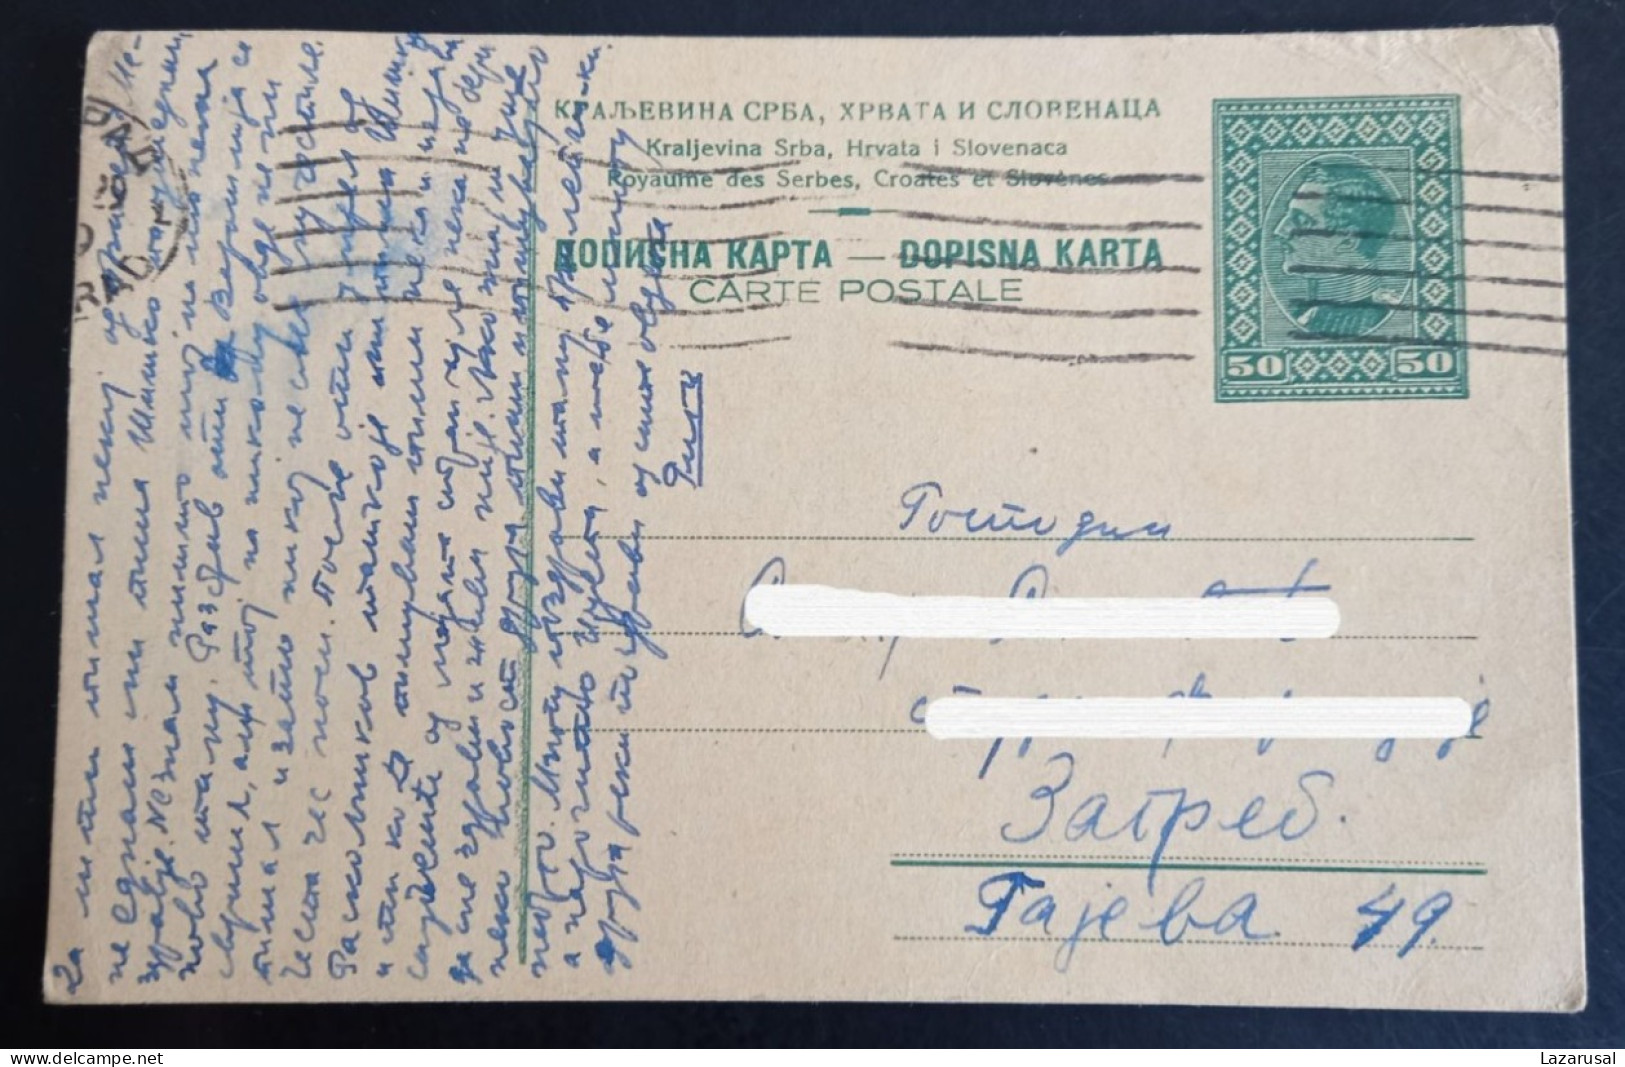 #21  Yugoslavia Kingdom SHS Postal Stationery - 1929   Beograd Serbia To Zagreb Croatia - Postal Stationery